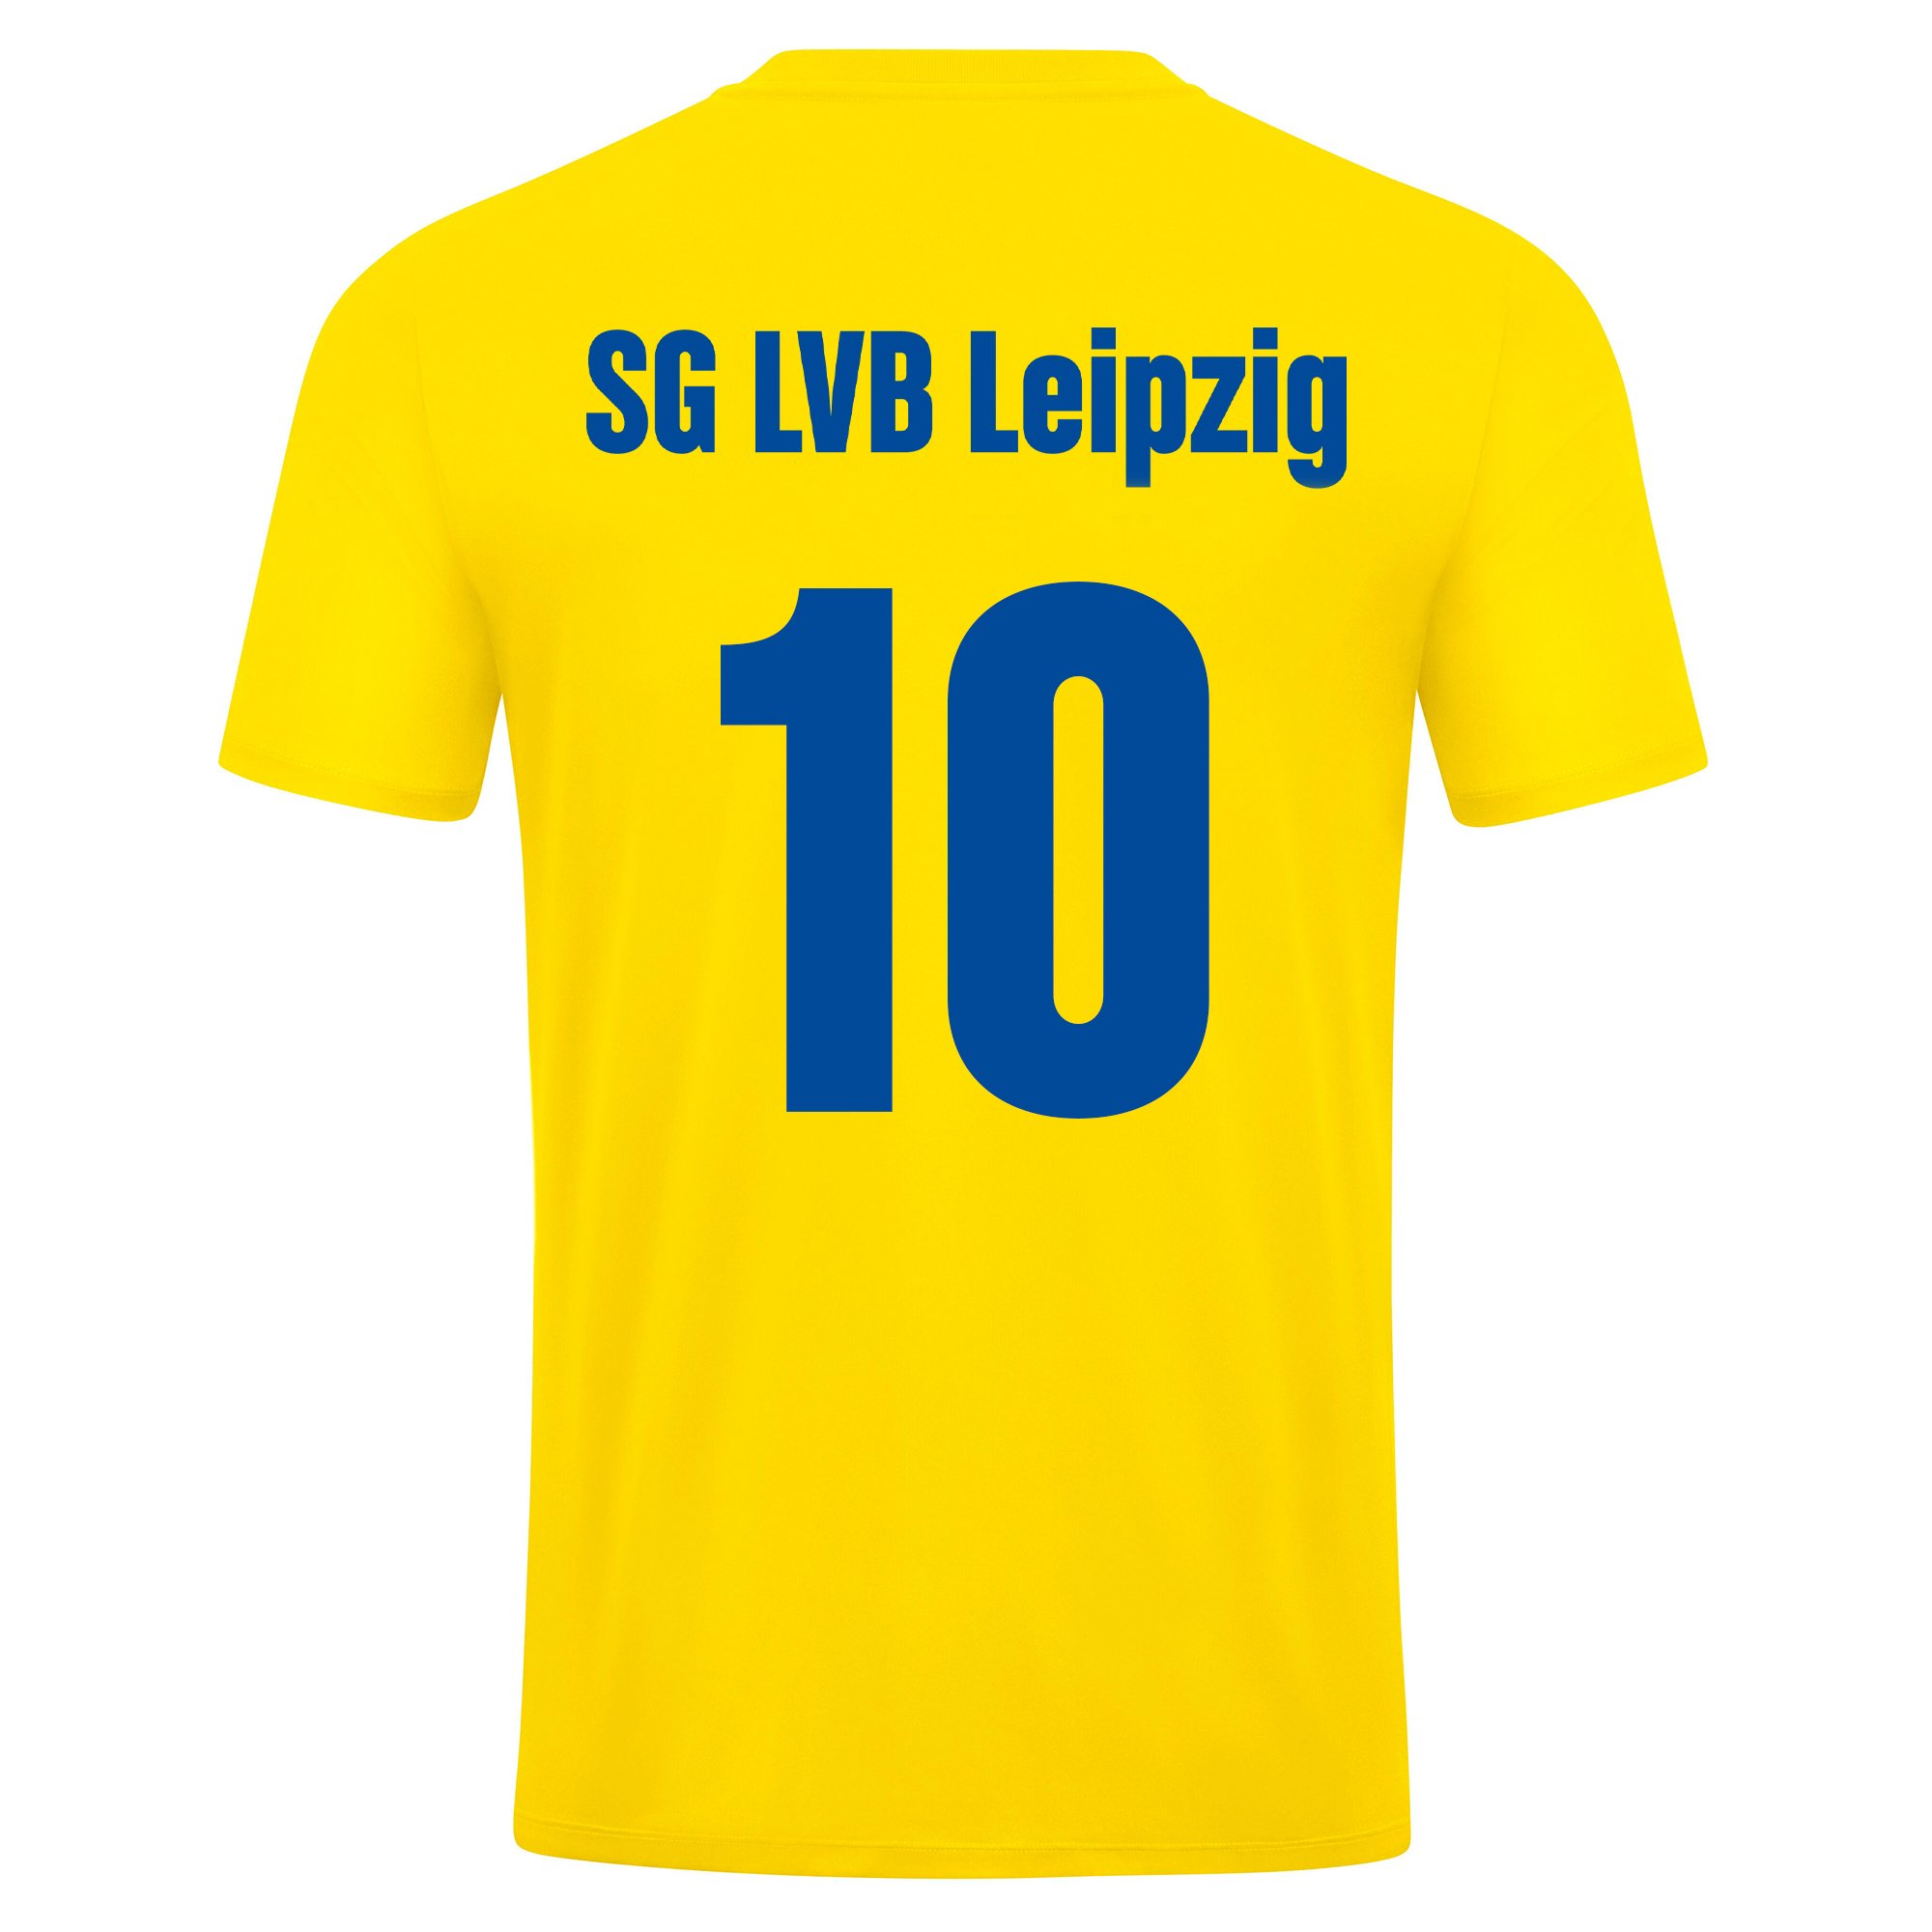 SG LVB Leipzig Trikot